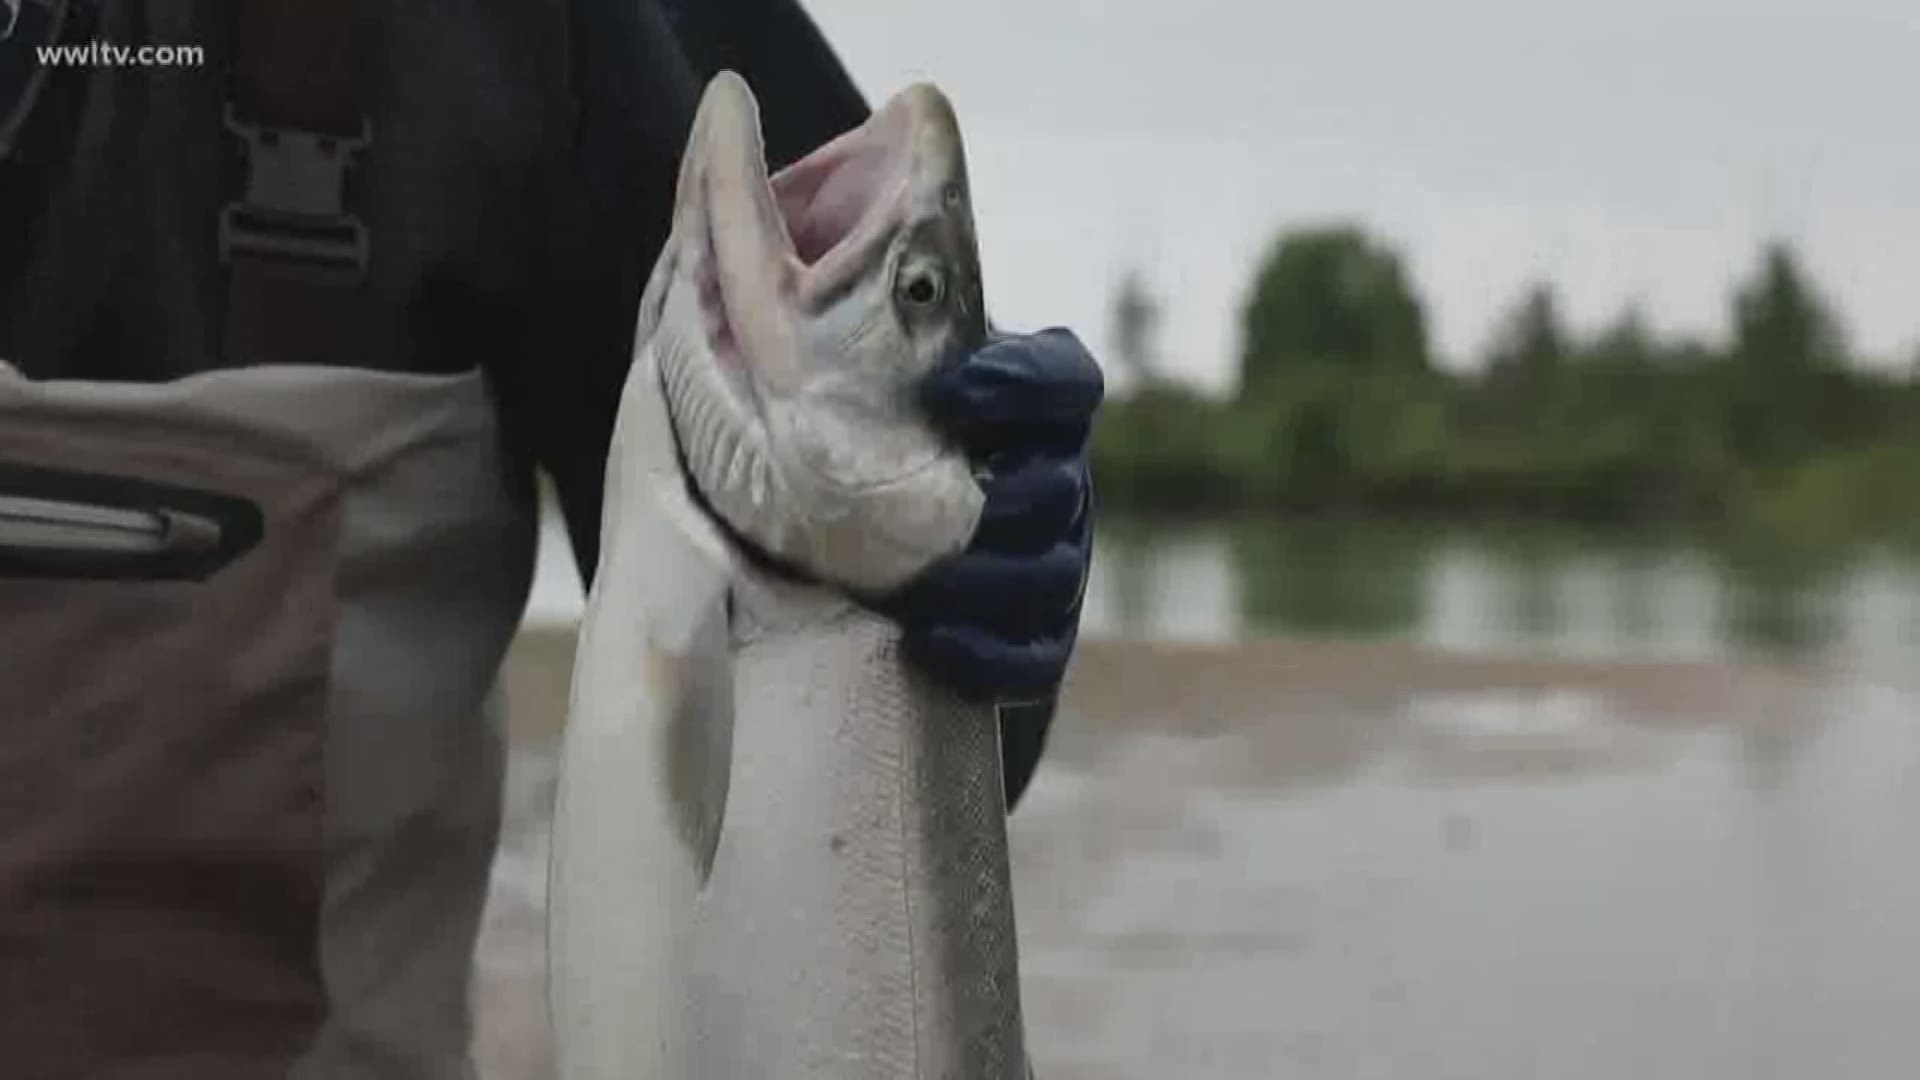 For more than a decade, Don Dubuc has led anglers to Alaska's Kenai Peninsula for salmon fishing